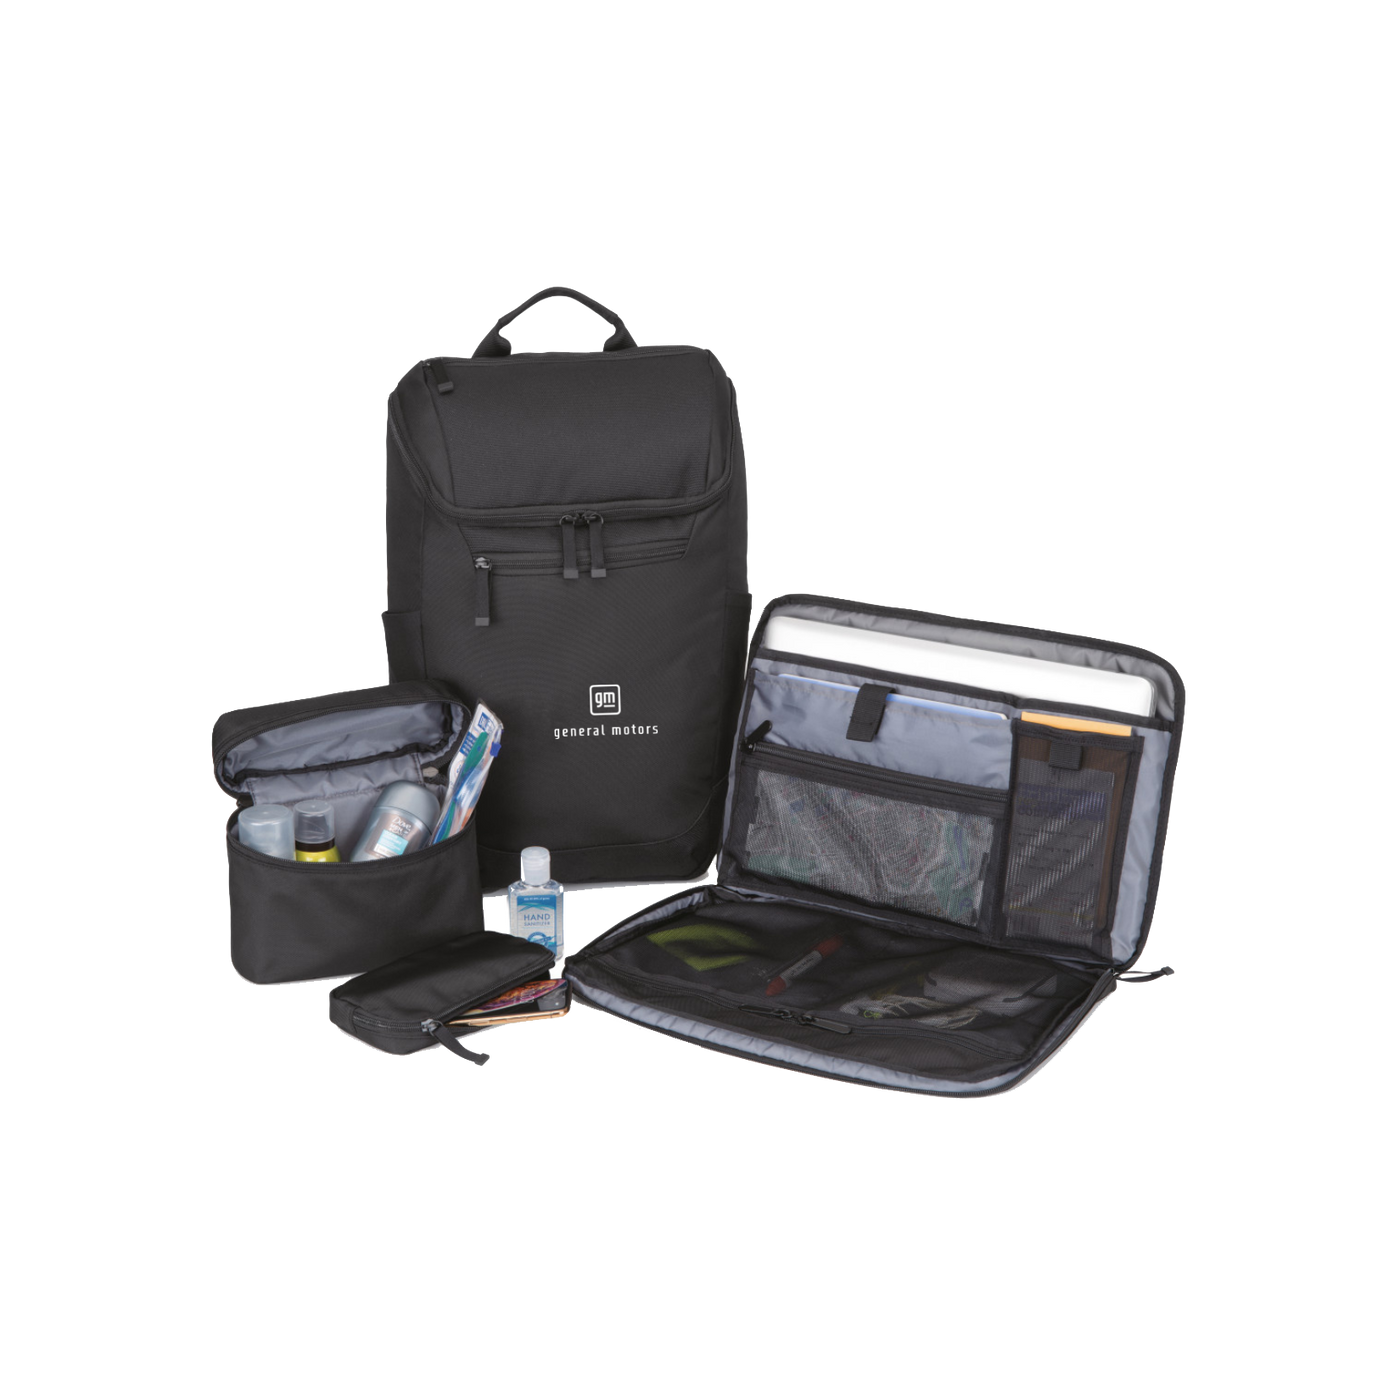 General Motors Mobile Professional Computer Backpack